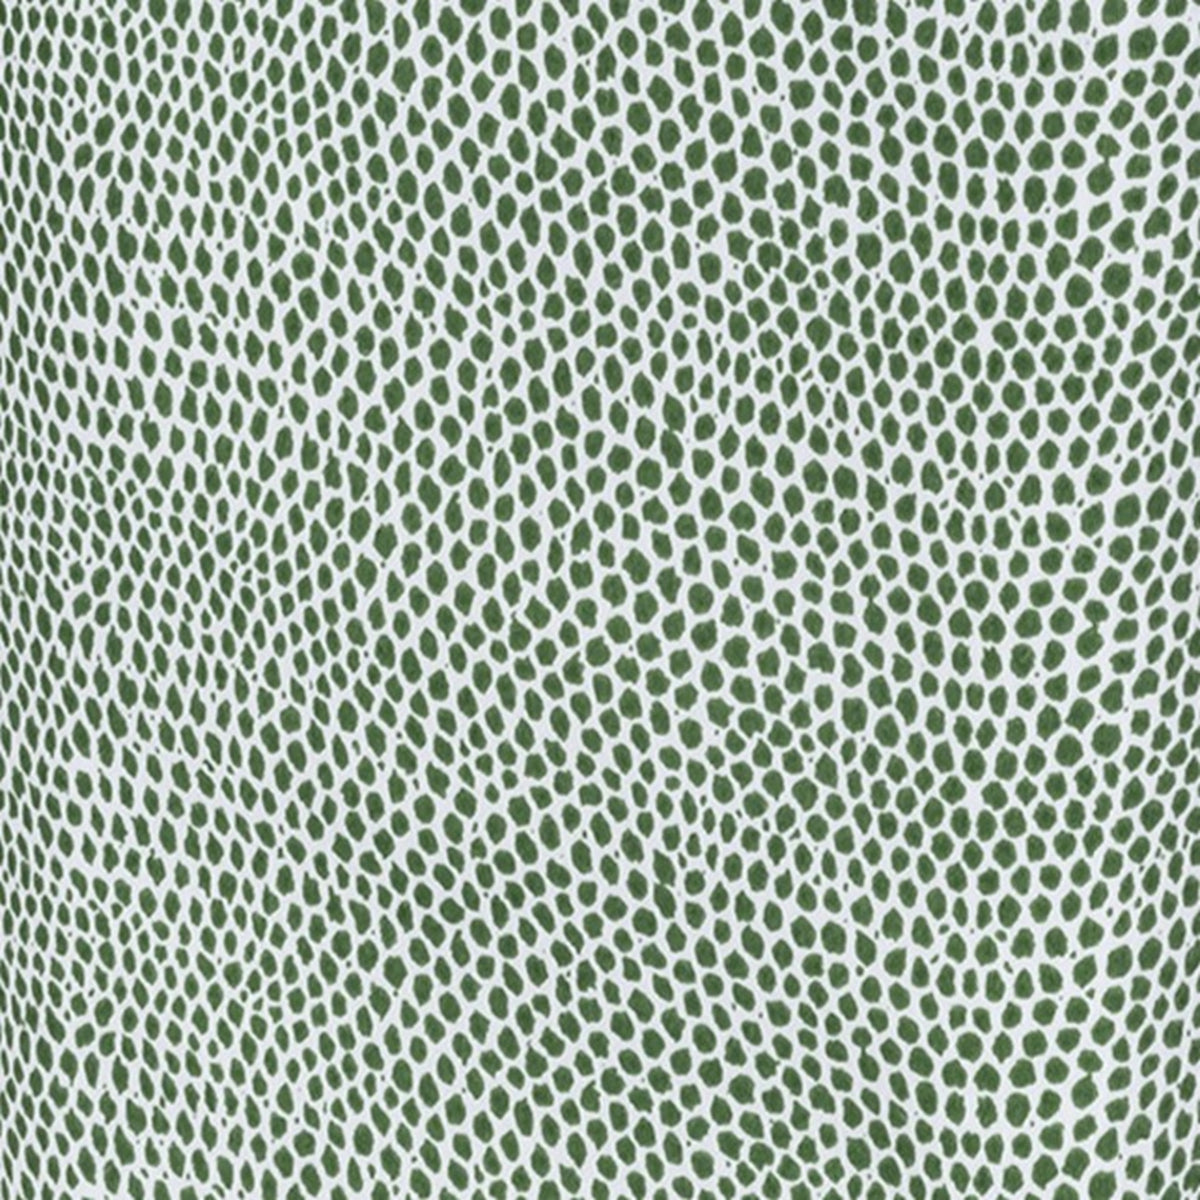 Swatch Sample of Matouk Jasper Tissue Box Cover in Green Color